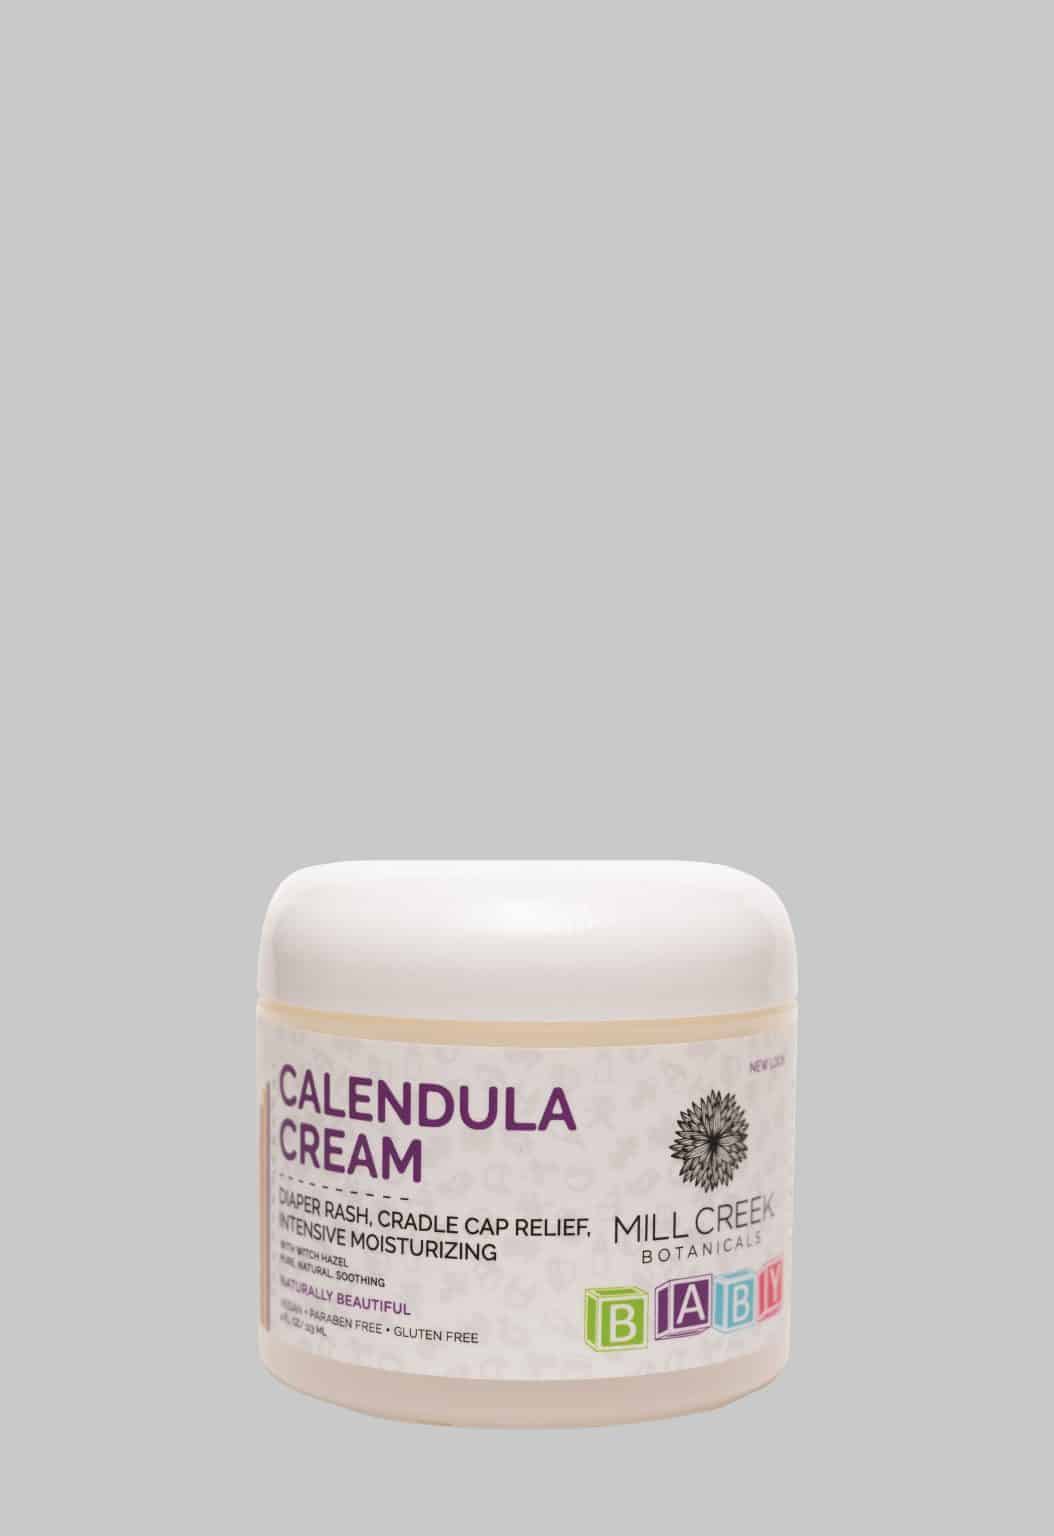 Mill Creek Baby Calendula Cream with Witch Hazel